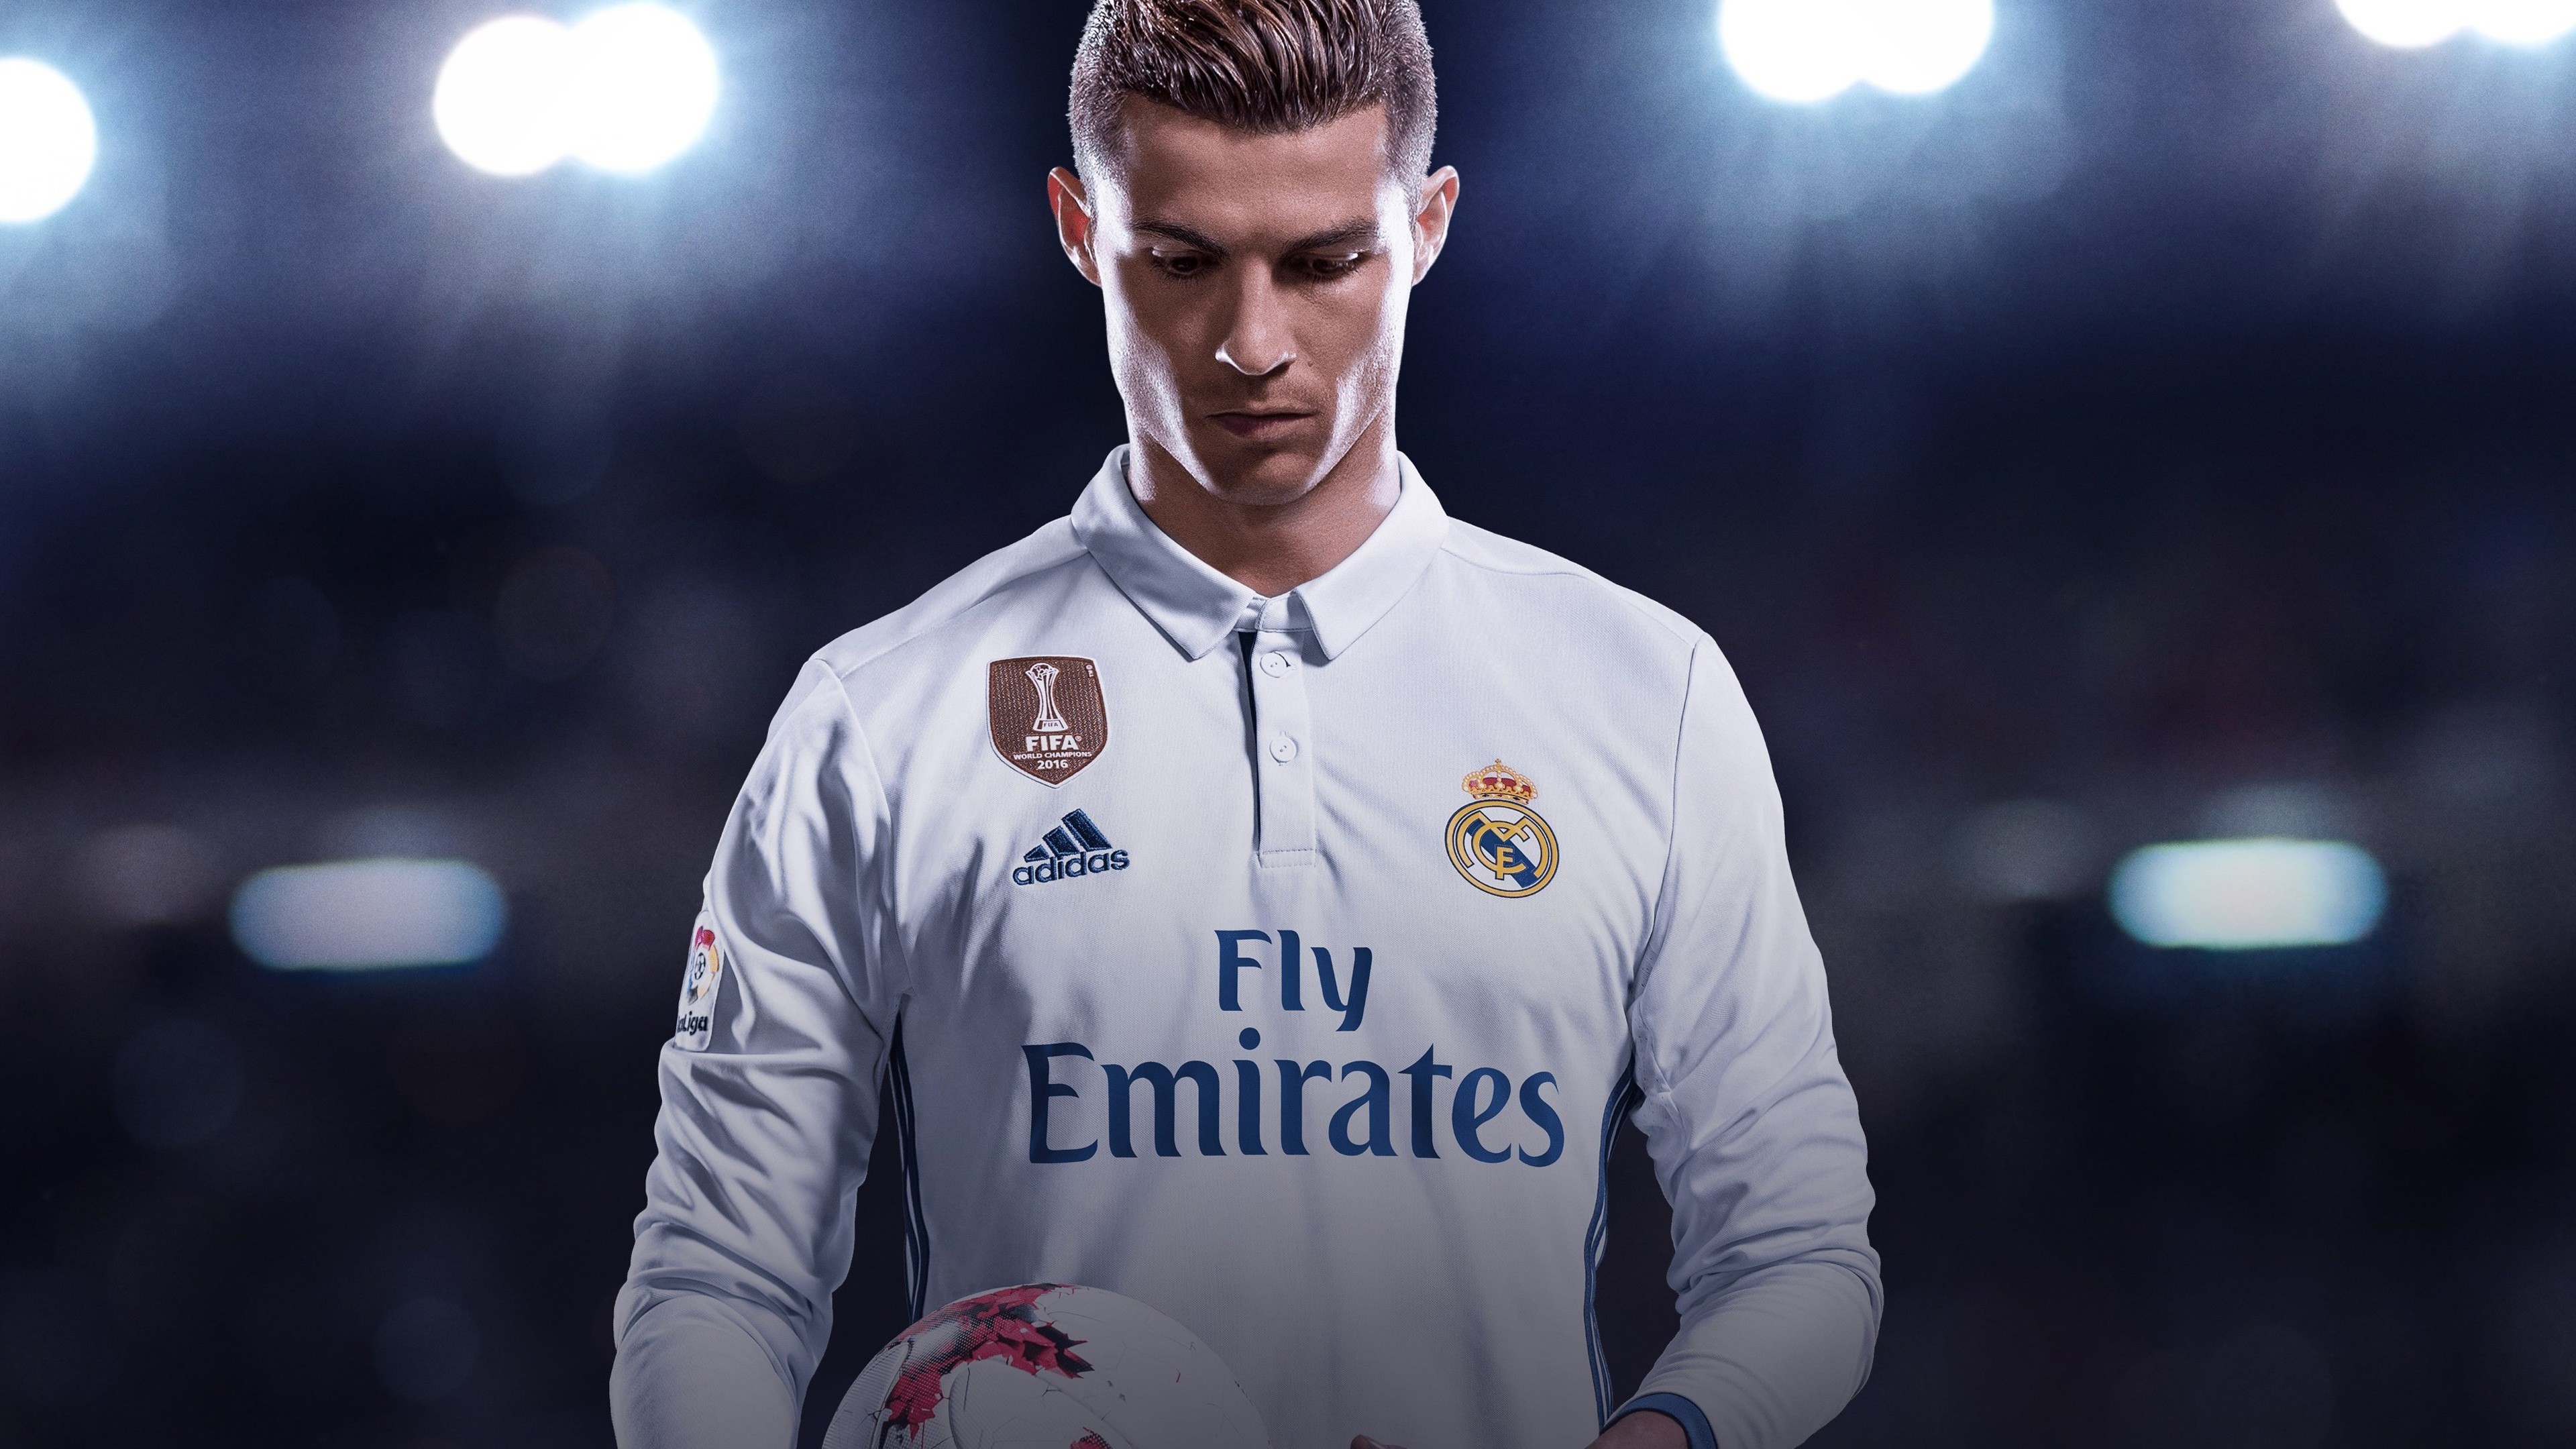 Cristiano Ronaldo Wallpaper HD The Best Image In